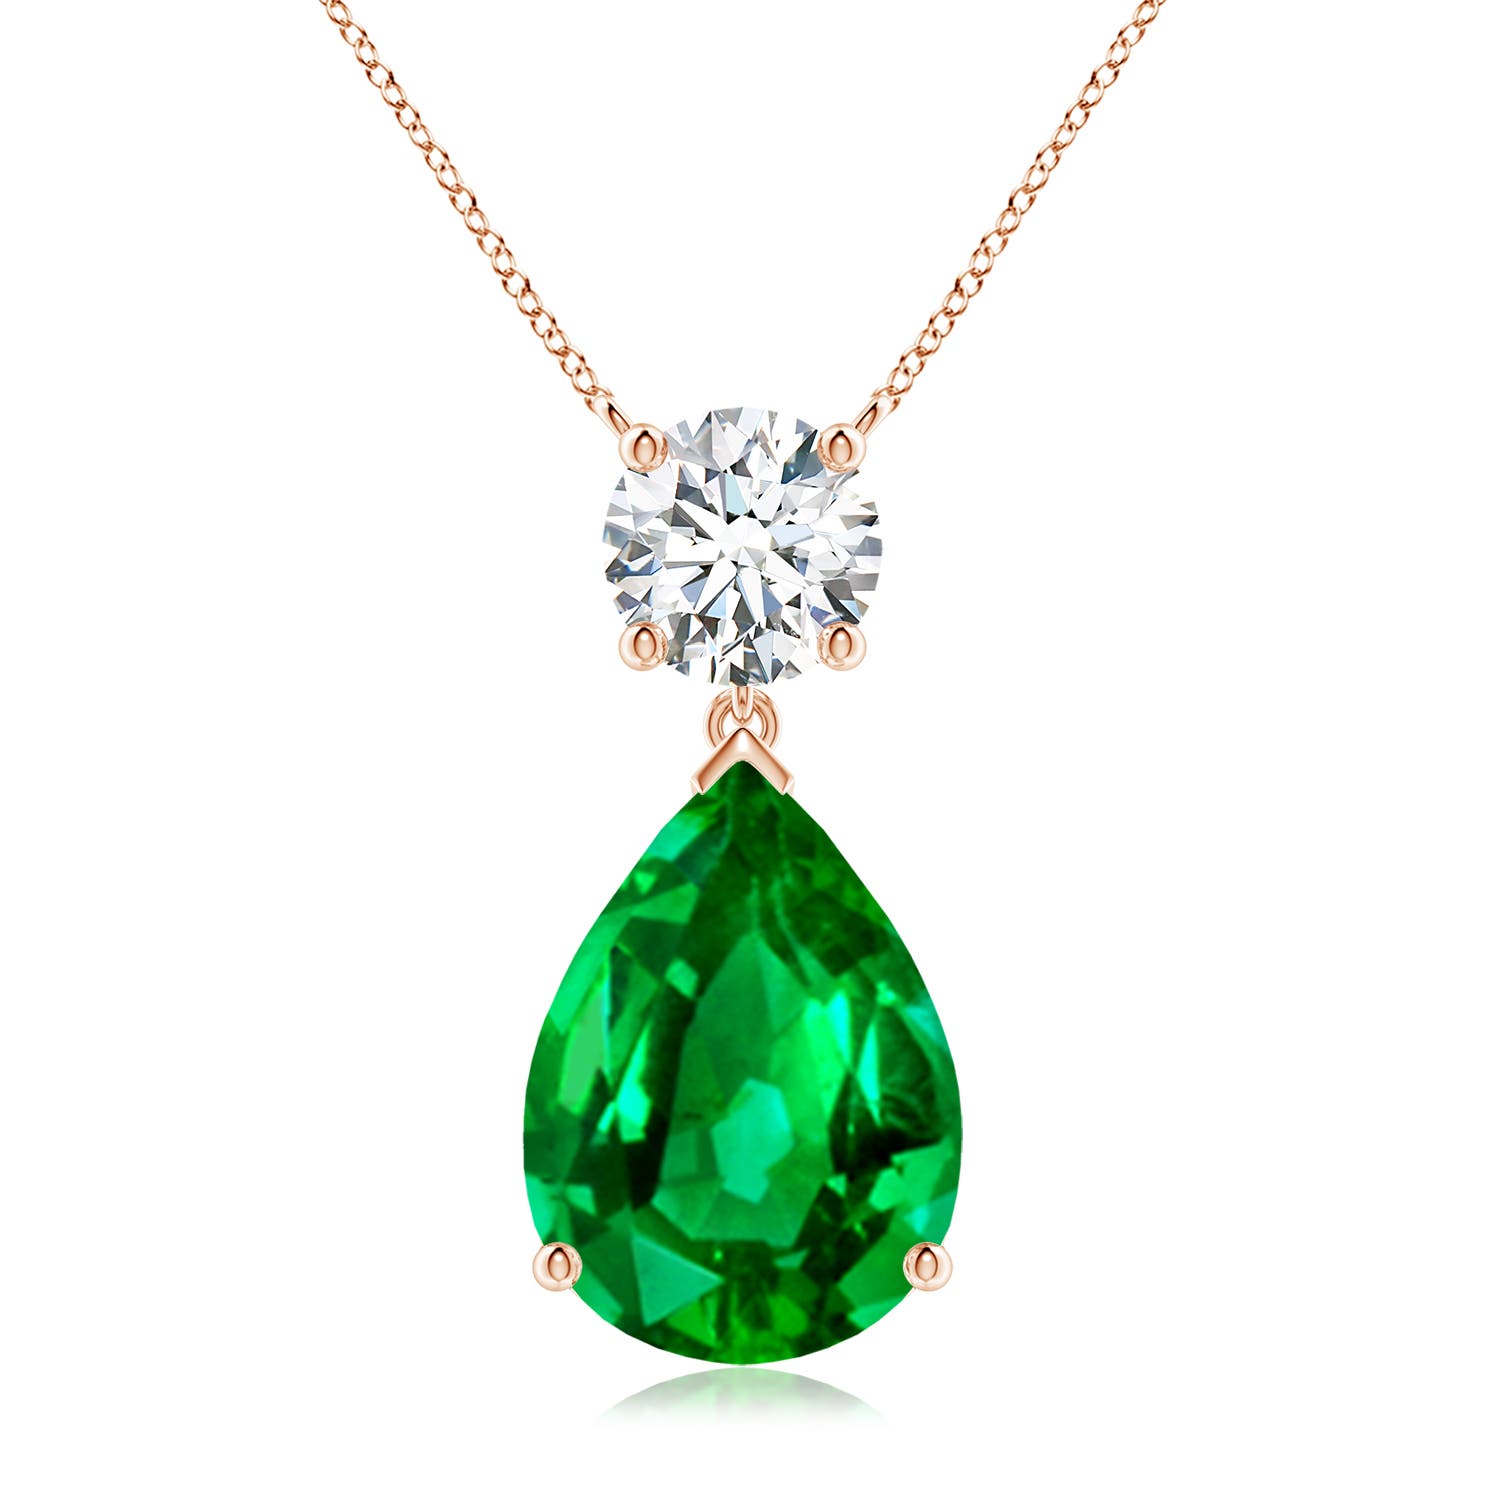 AAAA - Emerald / 7.6 CT / 18 KT Rose Gold